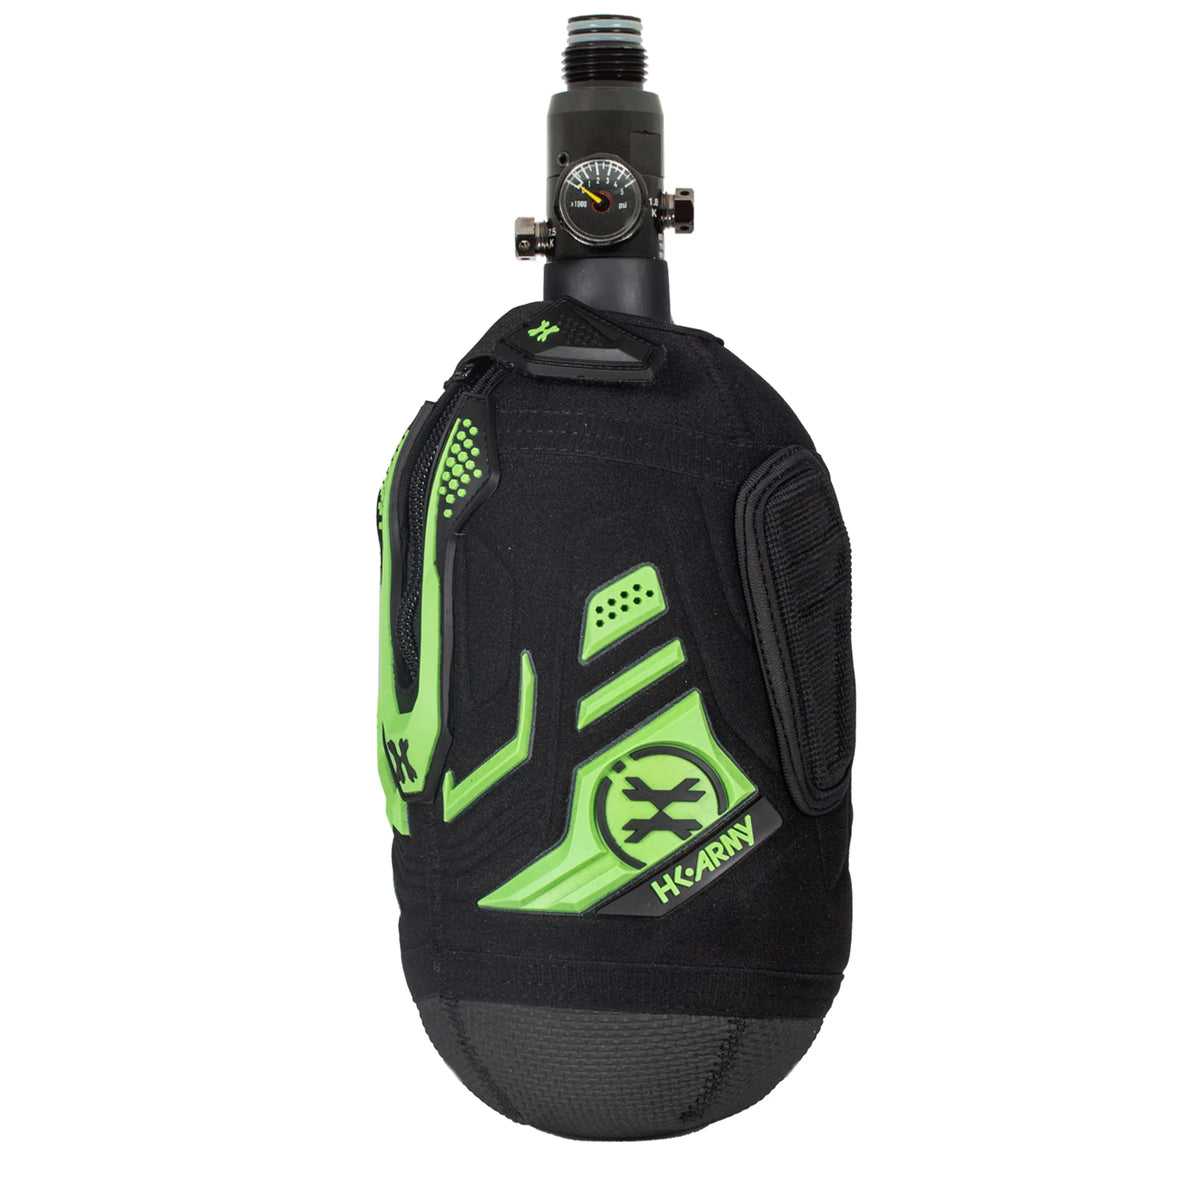 Paintball air tank cover / sleeve | hardline armored - Color: Green/black - energy